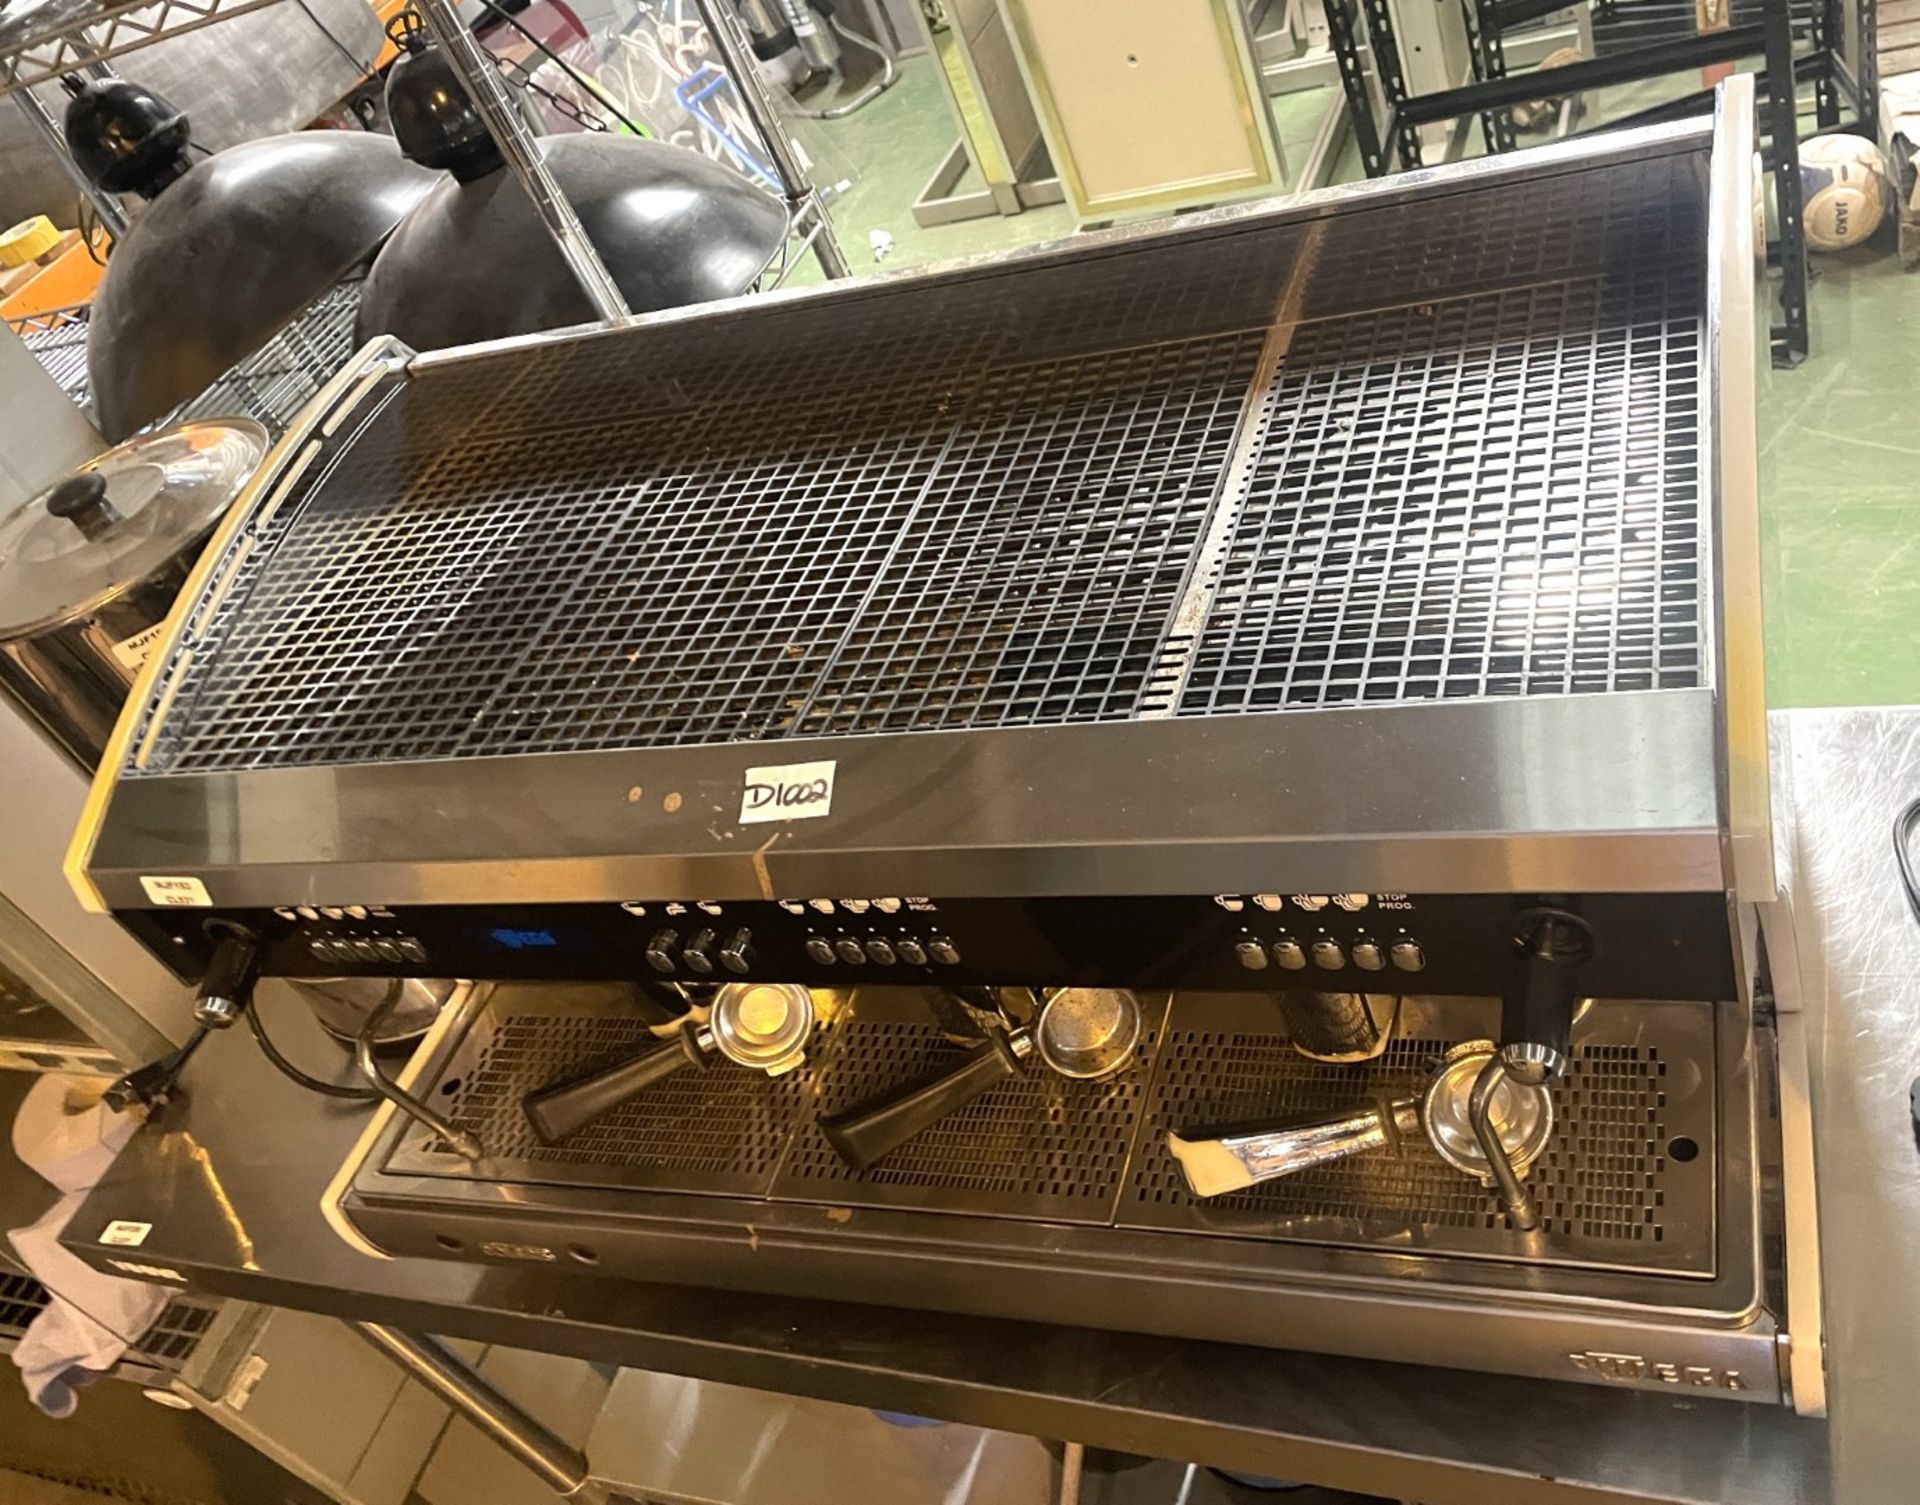 1 x Polaris Wega 3 Group Commercial Espresso Coffee Machine - Stainless Steel / Black Exterior - 3 P - Image 6 of 9